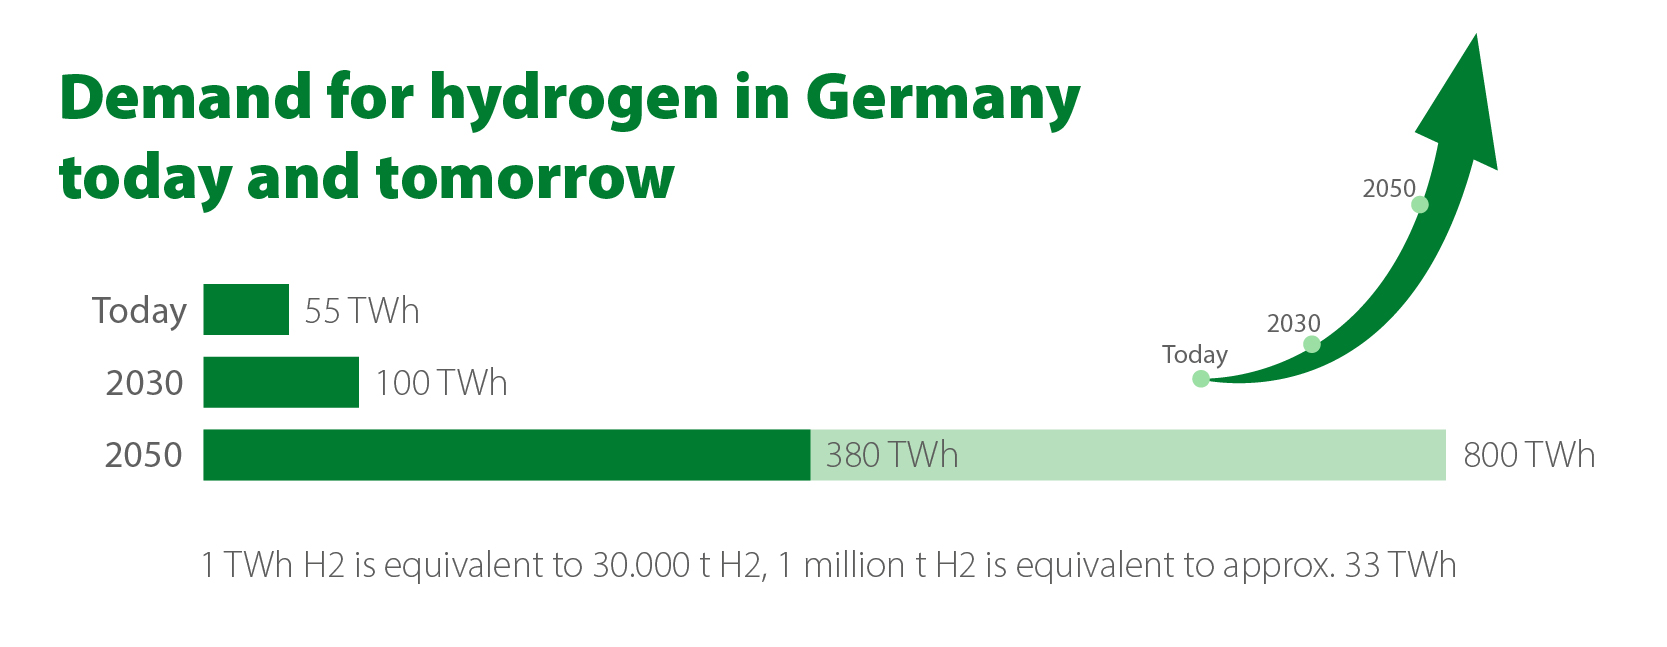 Hydrogen demand in Germany